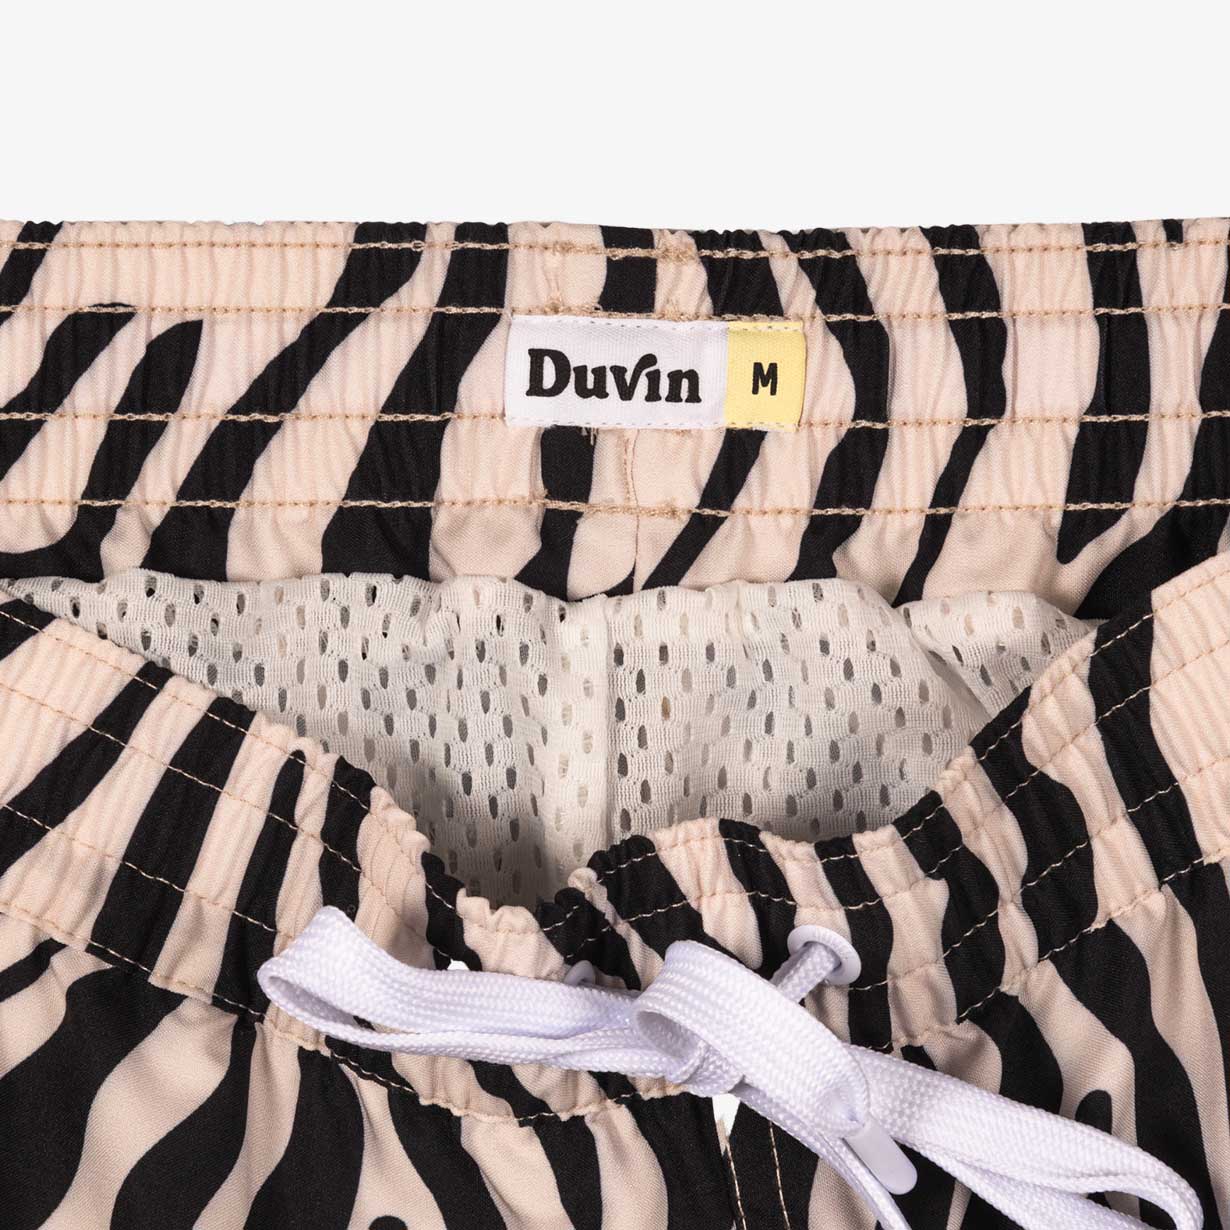 Zebra Disco Swim Short